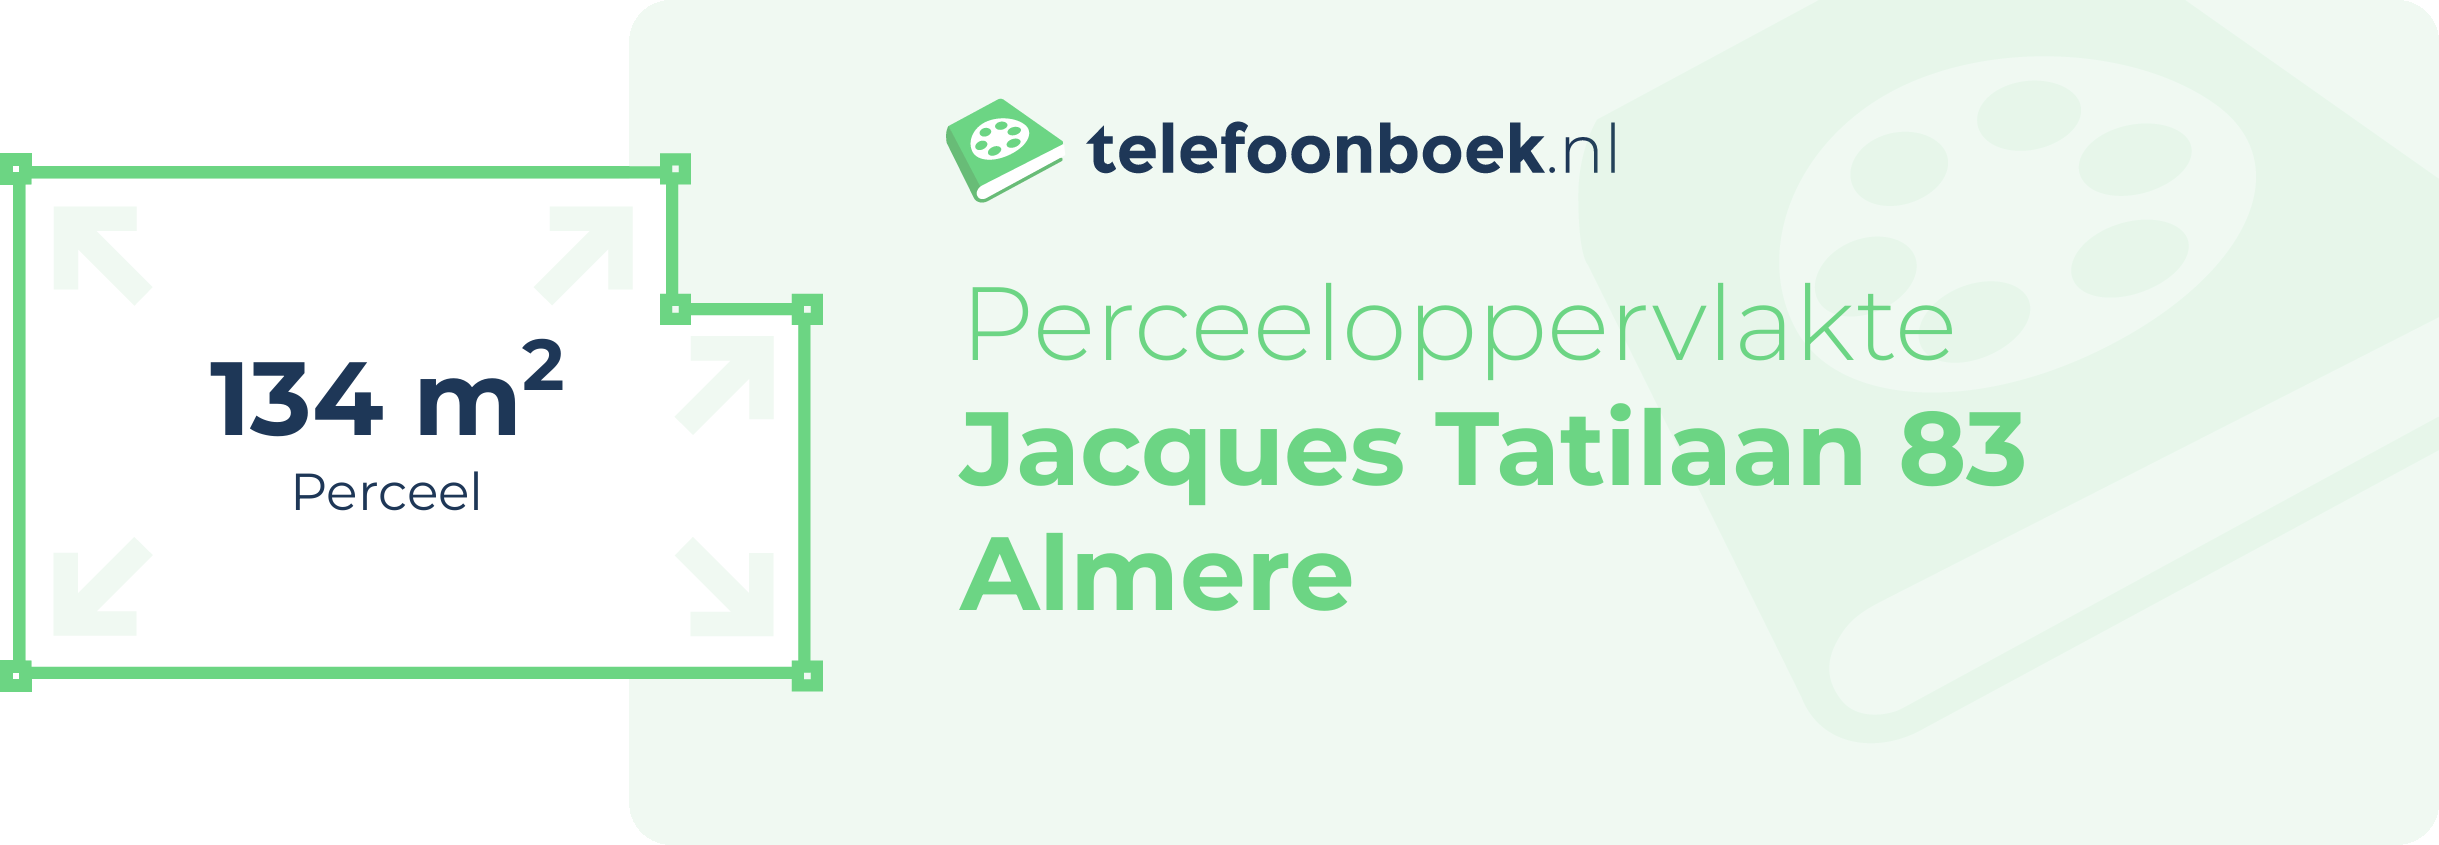 Perceeloppervlakte Jacques Tatilaan 83 Almere